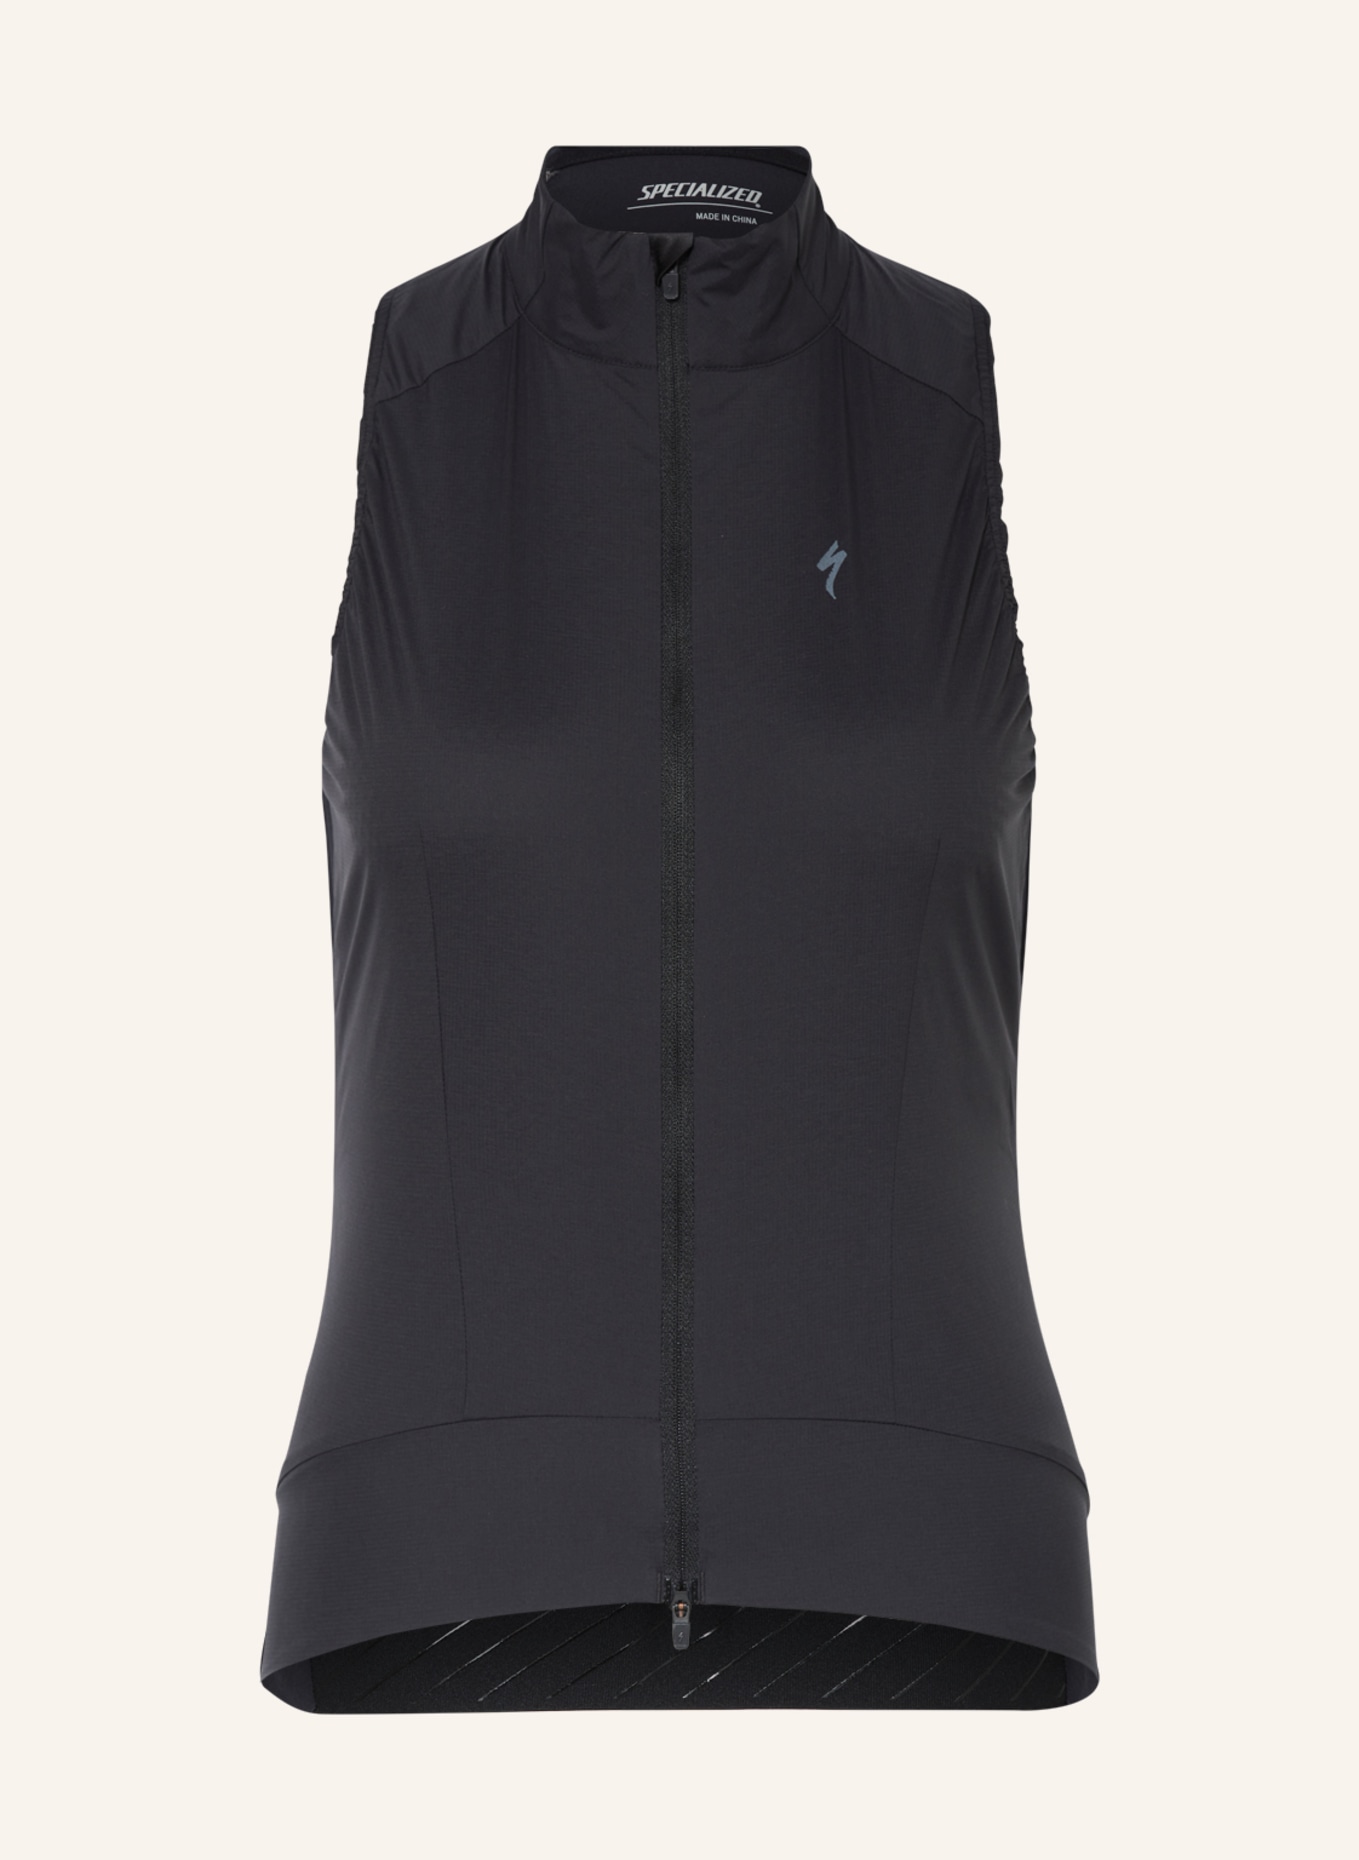 SPECIALIZED Cycling vest PRIME ALPHA®, Color: BLACK (Image 1)